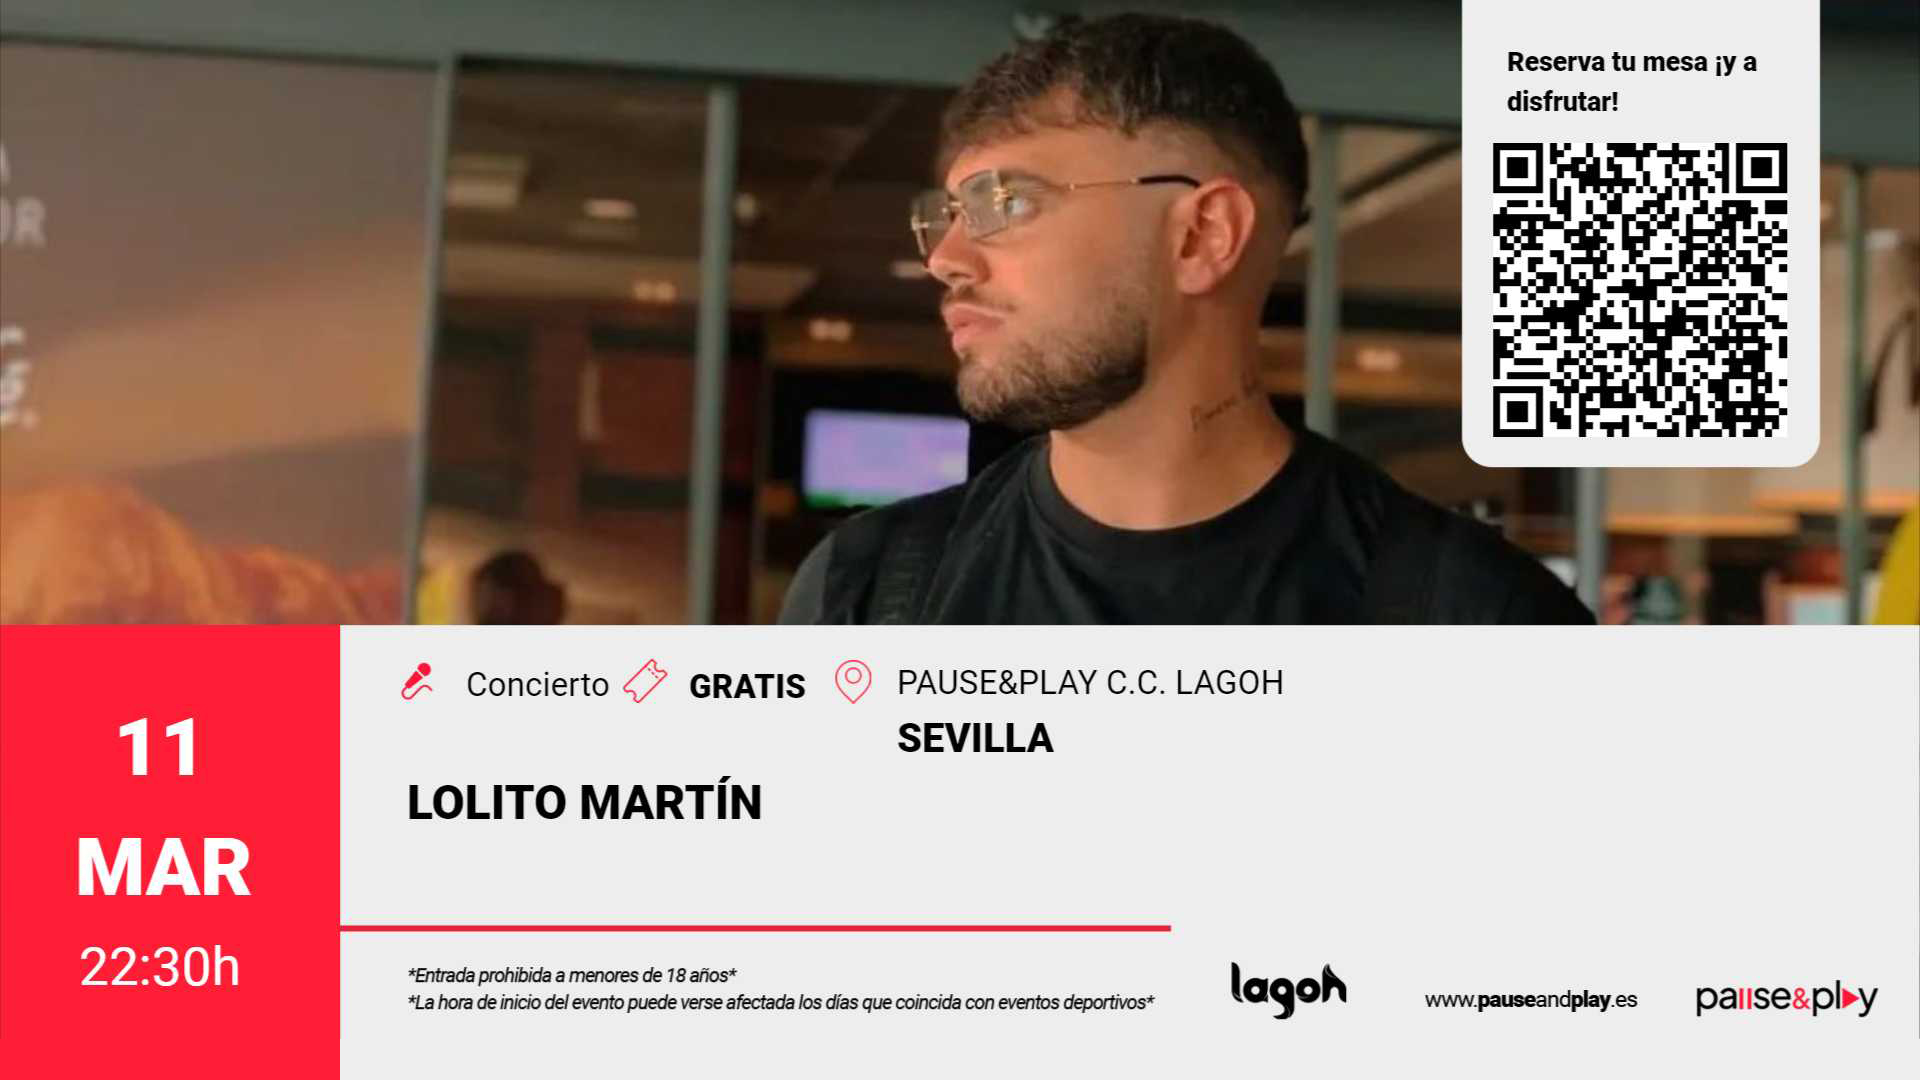 Concierto Lolito Martín Pause&Play C.C. Lagoh (Sevilla)